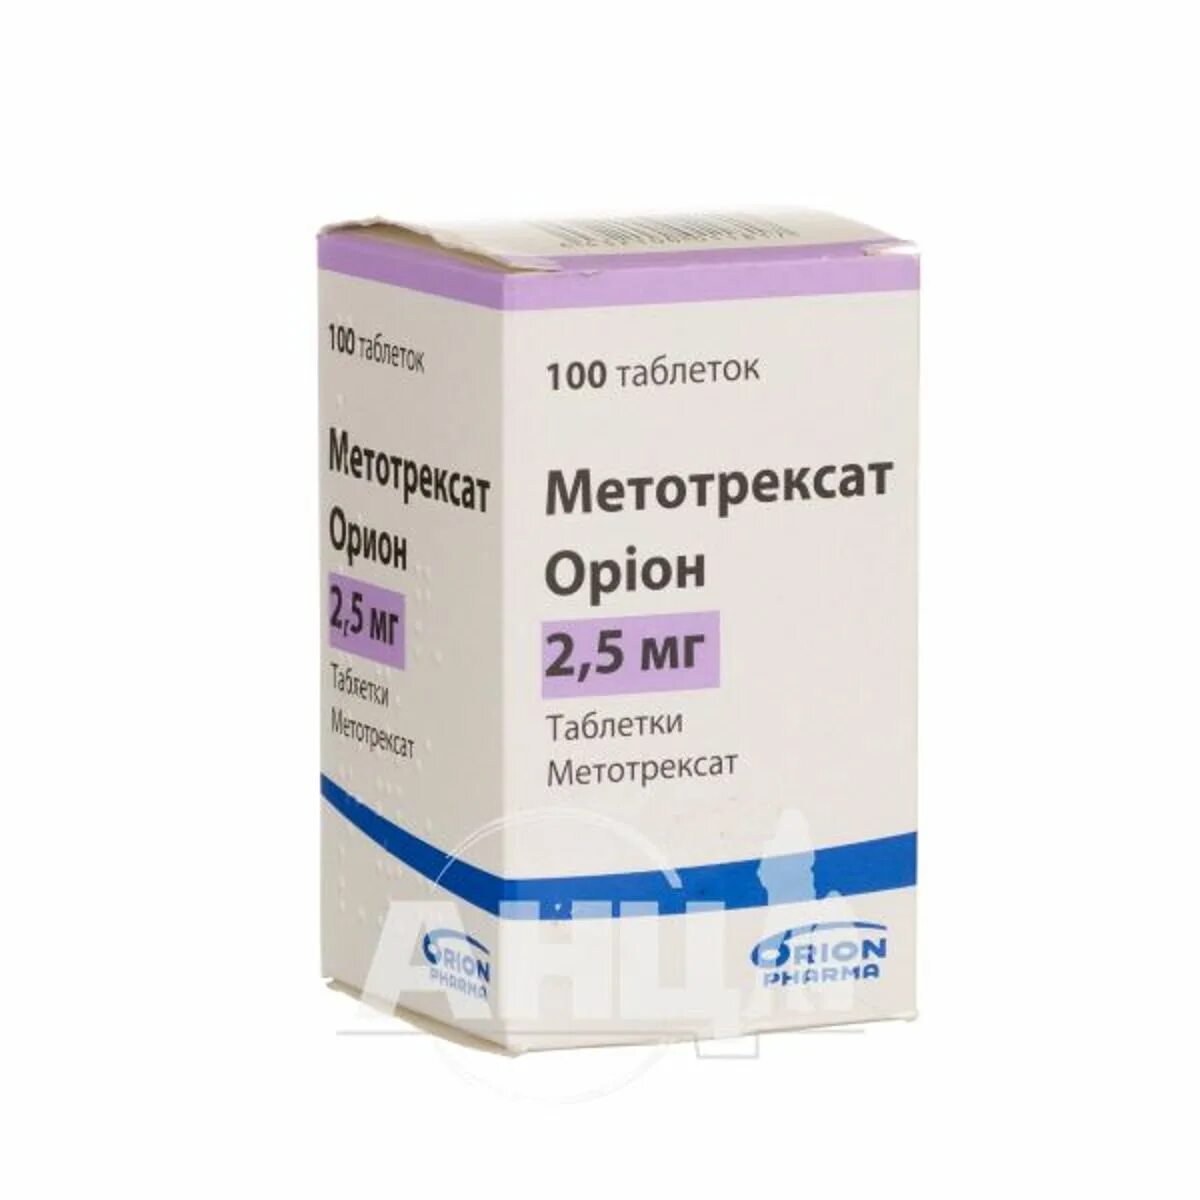 Метотрексат отзывы врачей. Метотрексат Орион 2.5 мг. Орион лекарство. Метотрексат Орион таблетки купить. Орион таблетки липидовосстанавливающий.